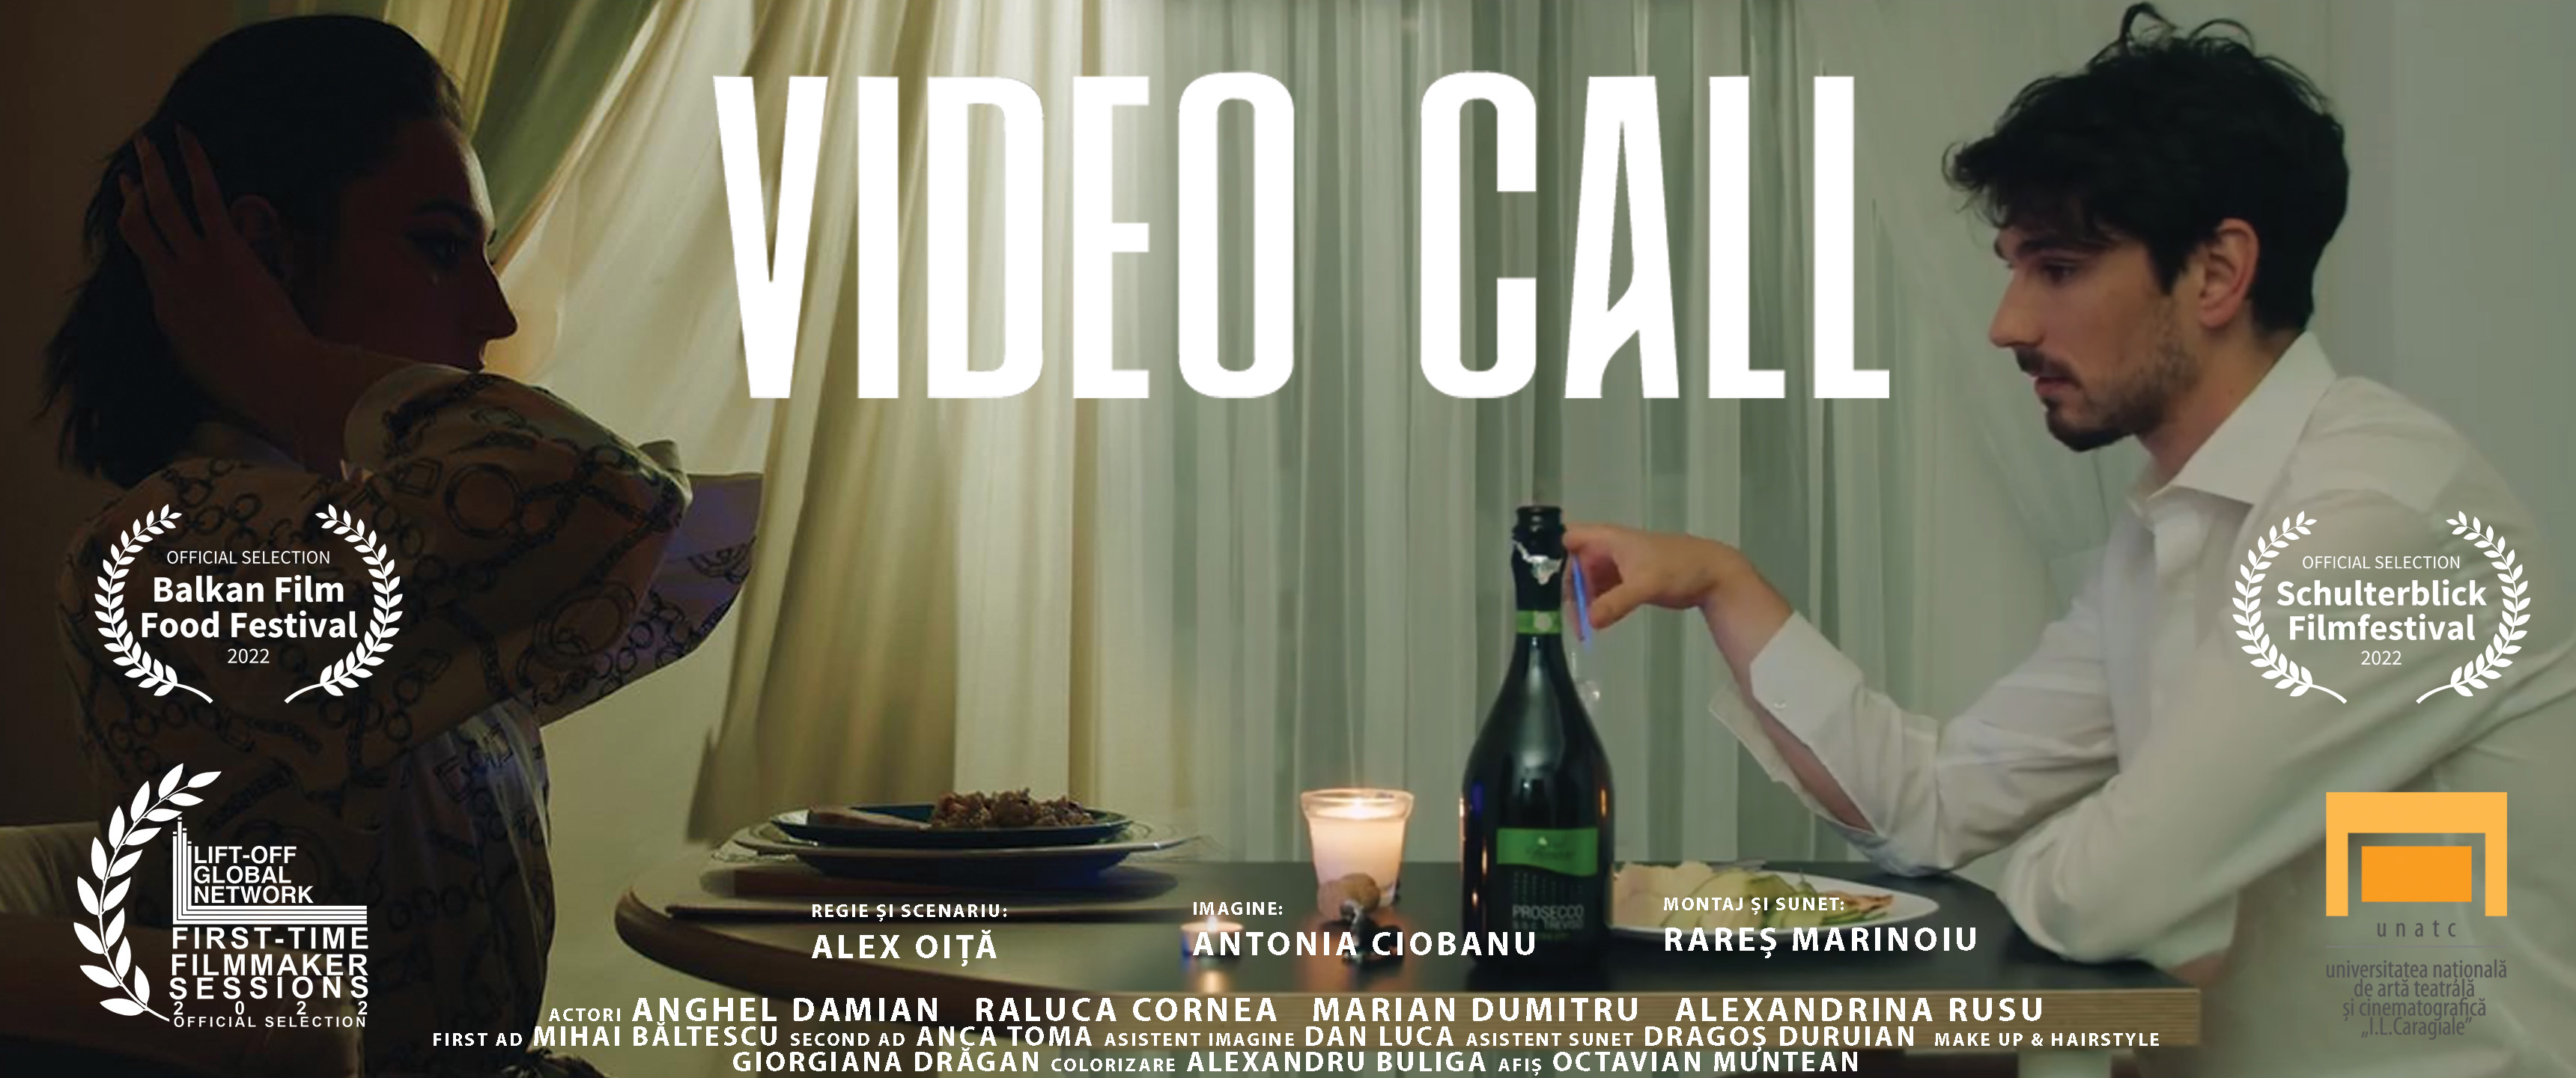 Video Call (2021) - Photo